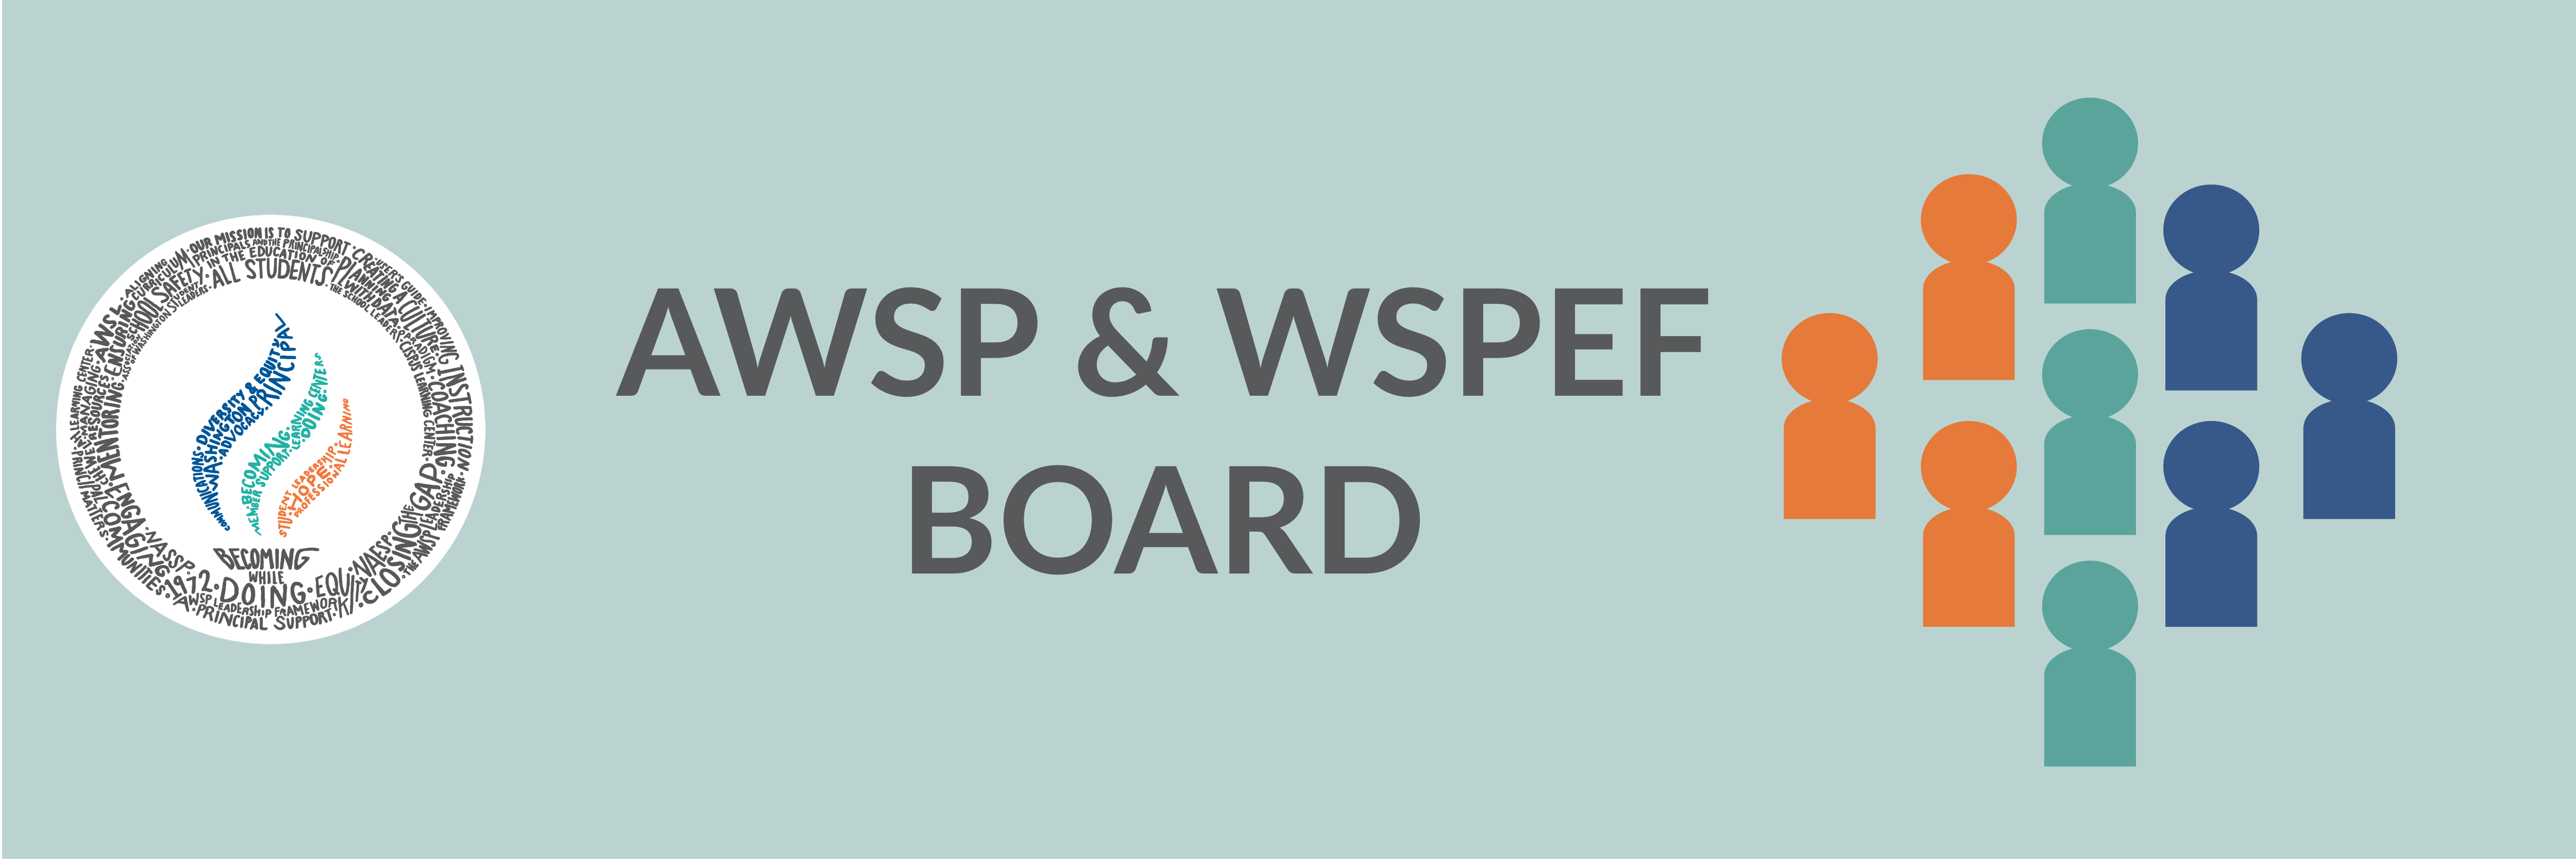 awsp_and_wspef_boards